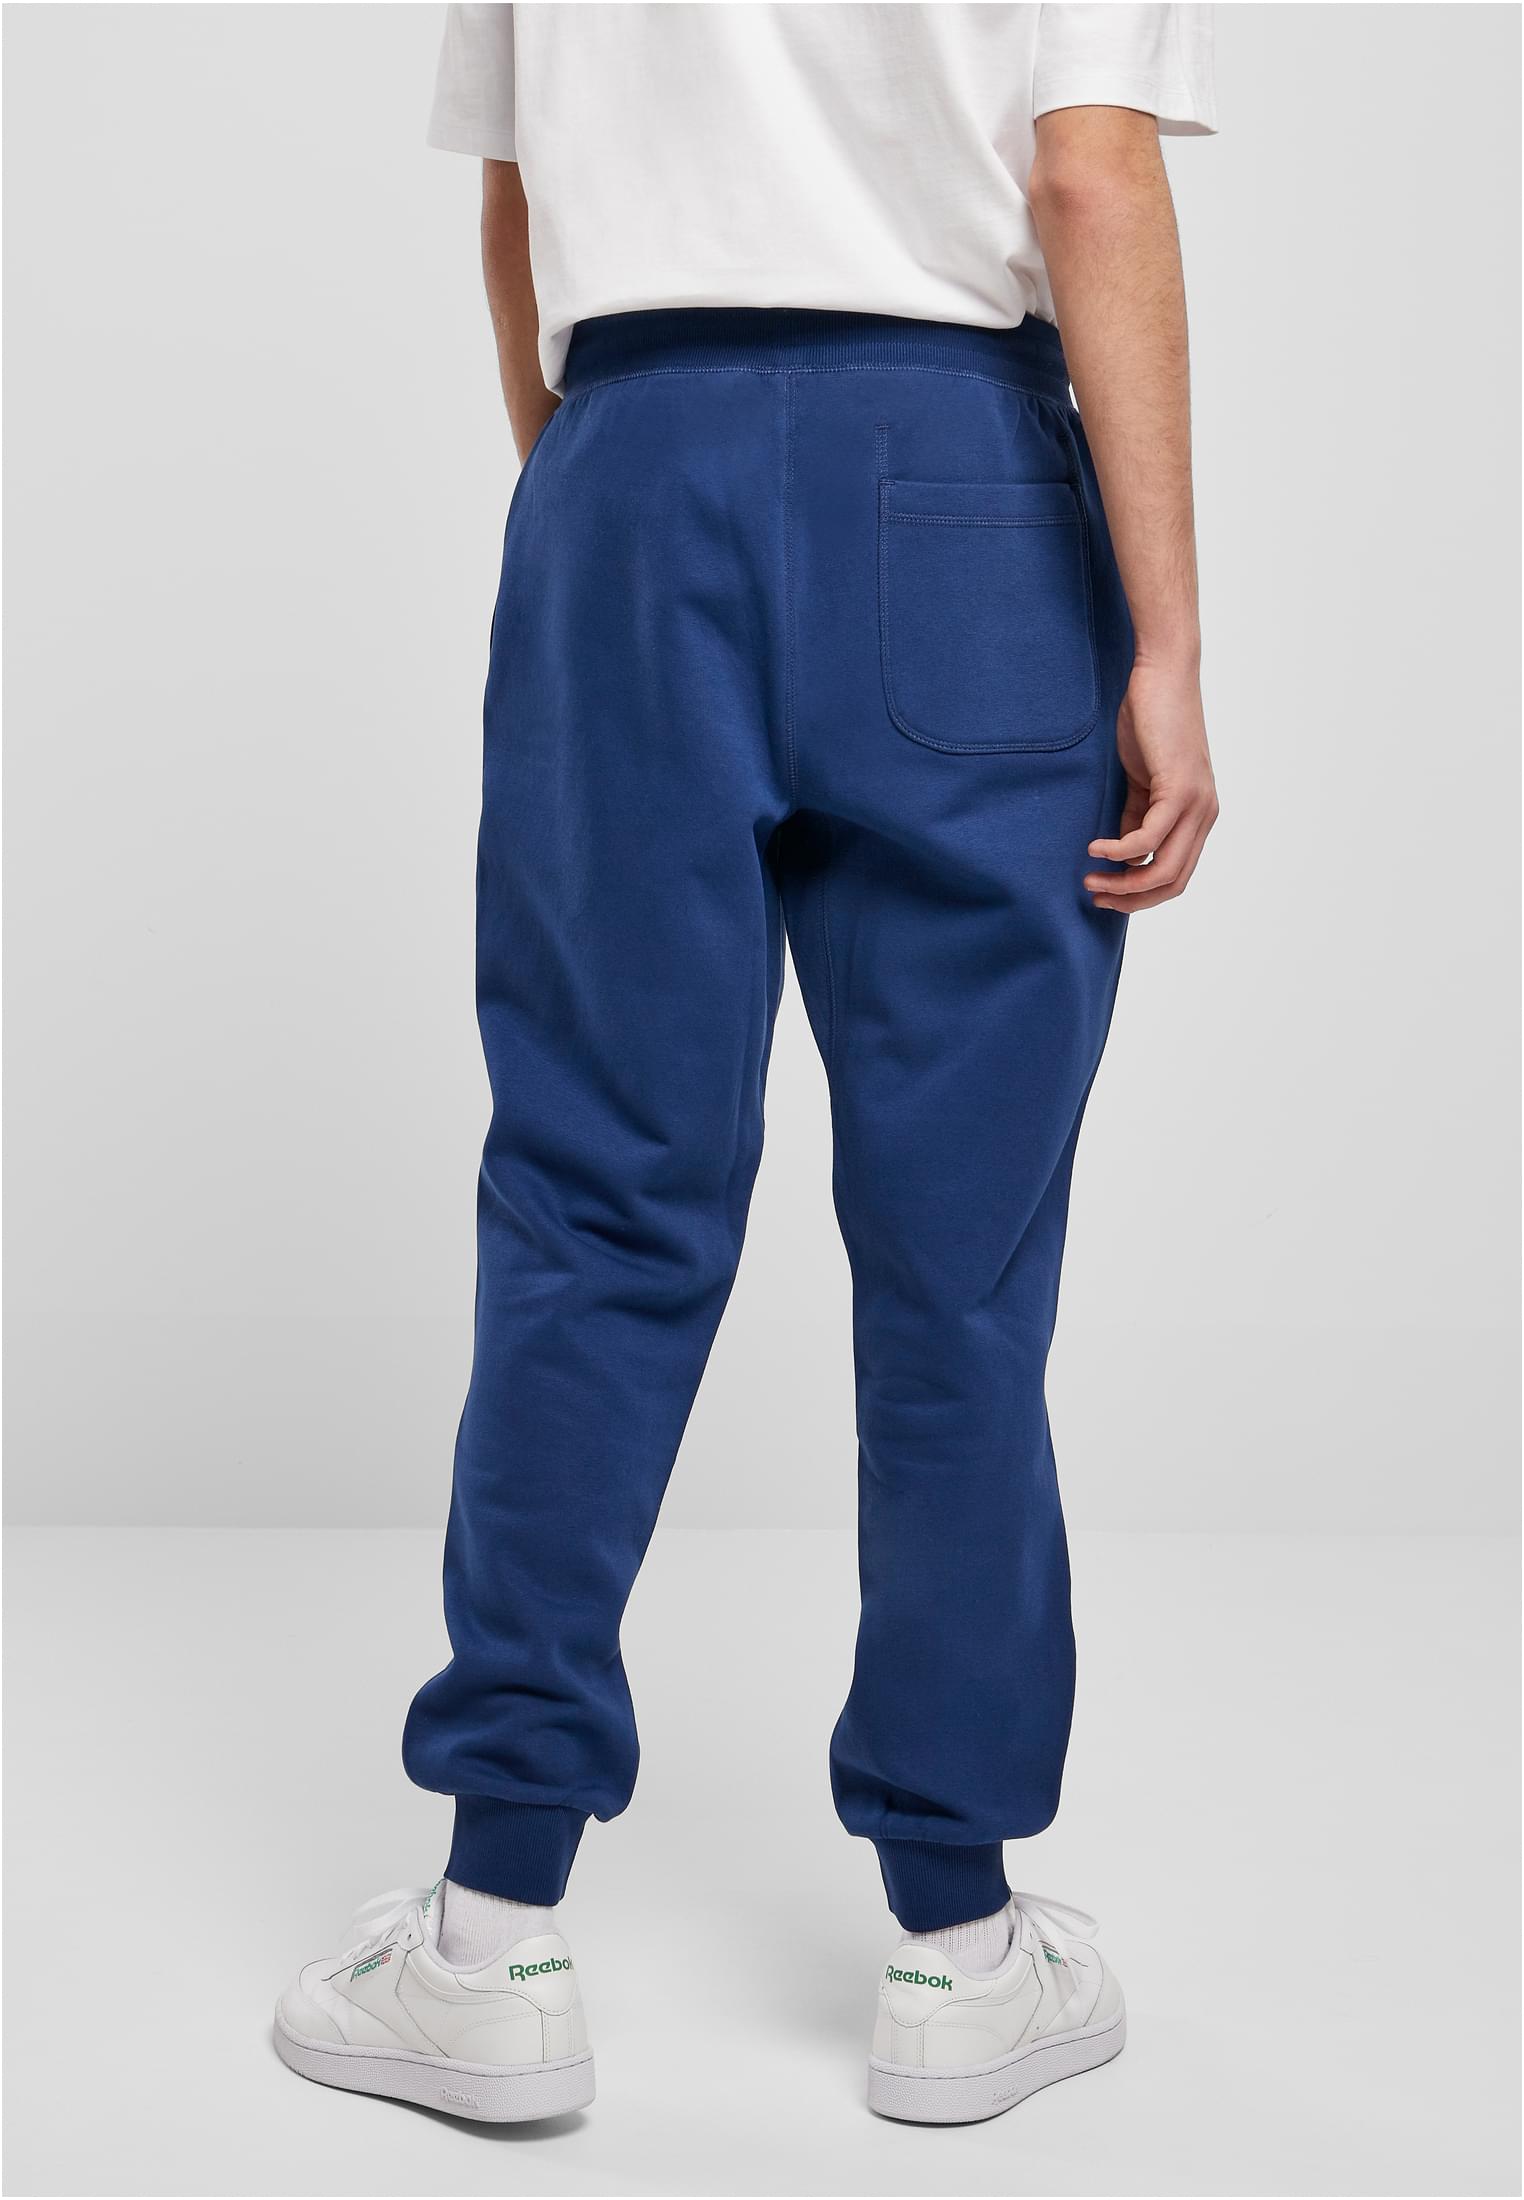 Herren Basic Sweatpants in Farbe spaceblue